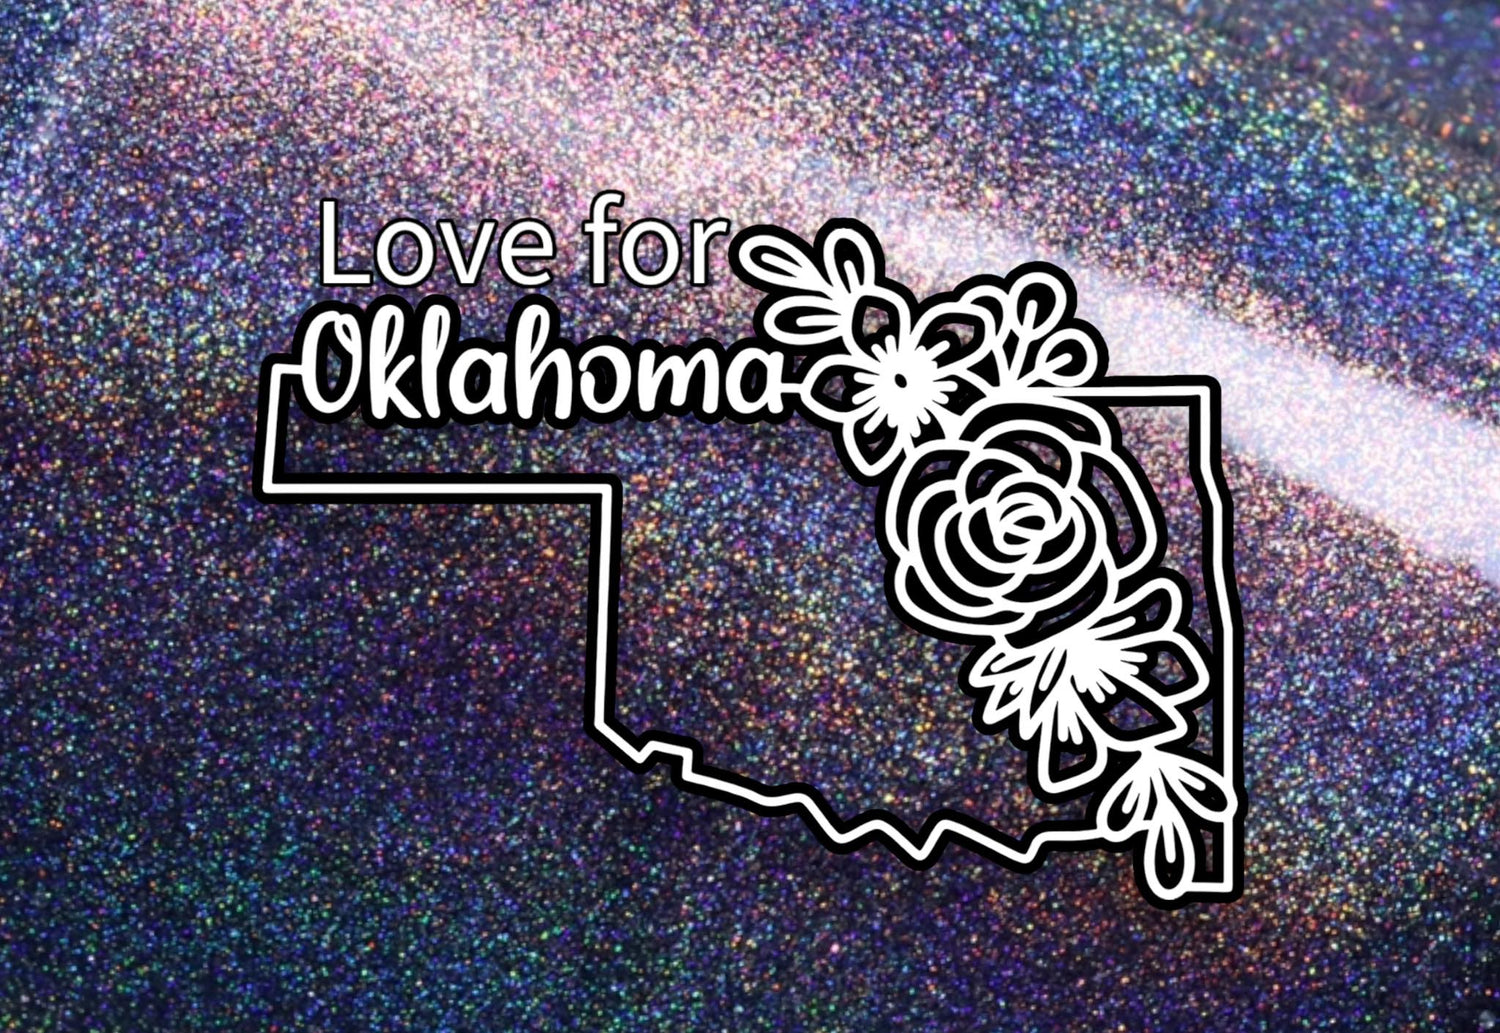 Love for Oklahoma